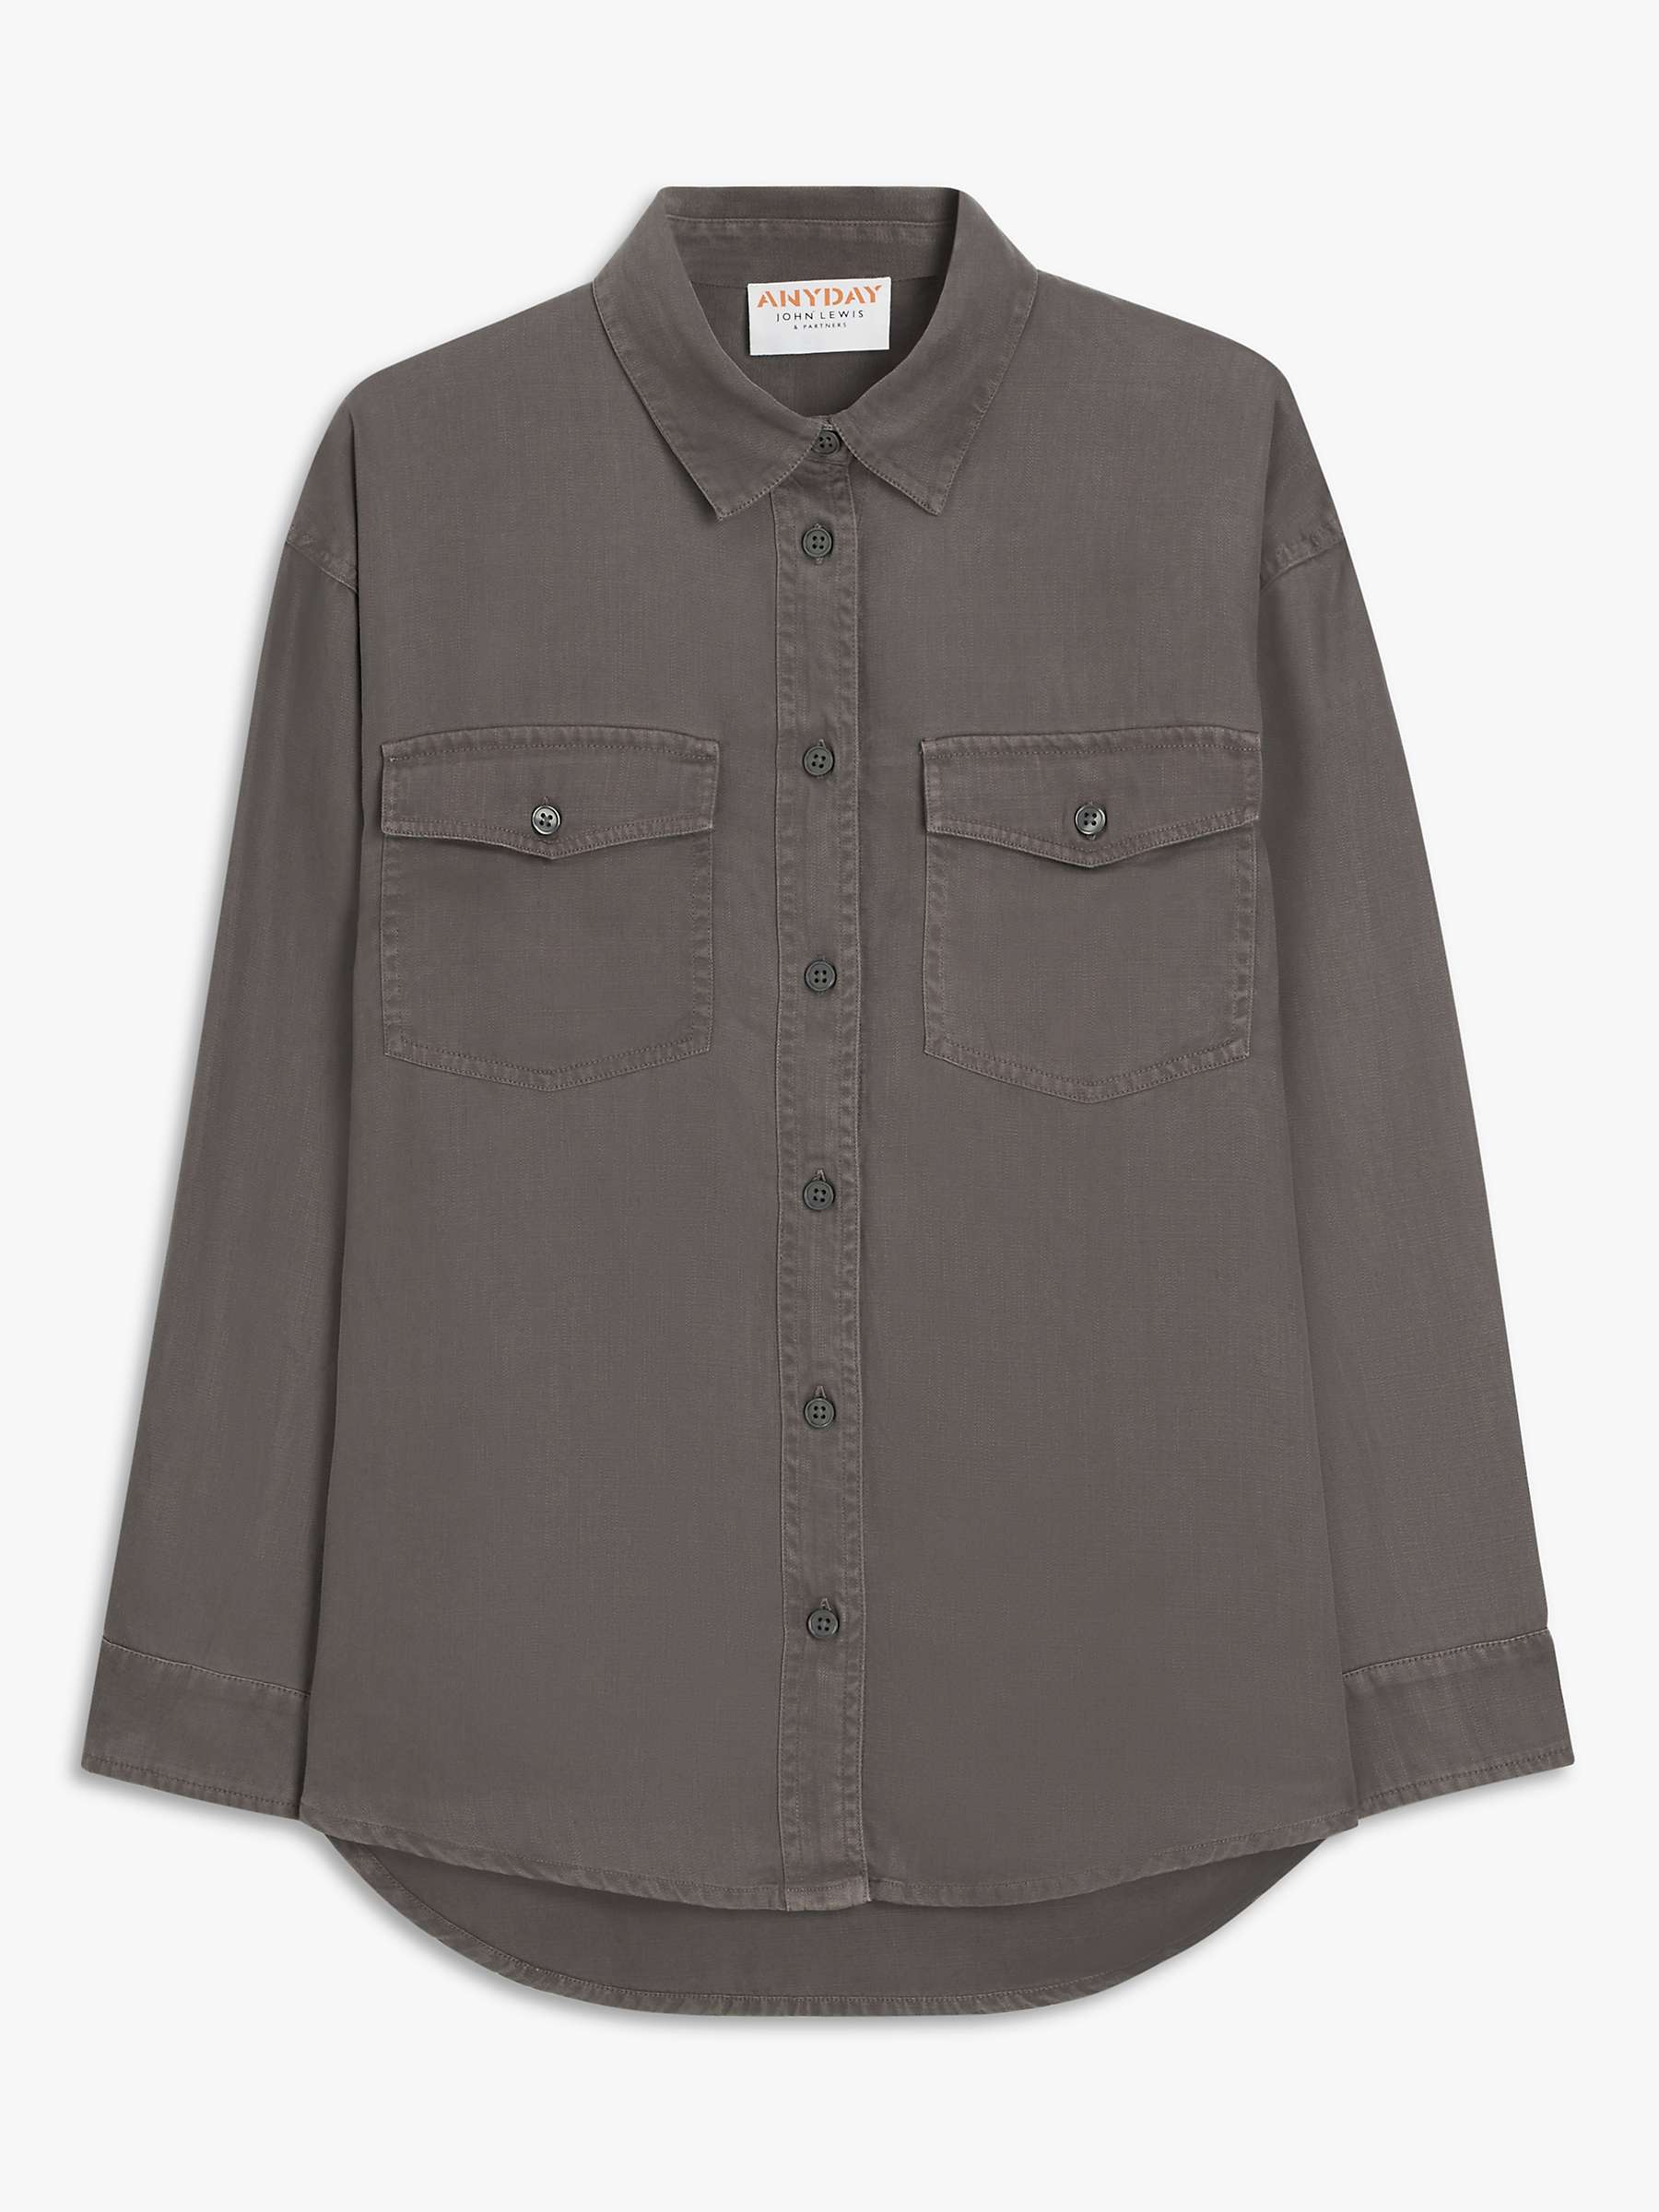 John Lewis ANYDAY Long Sleeve Utility Shirt, Grey at John Lewis & Partners